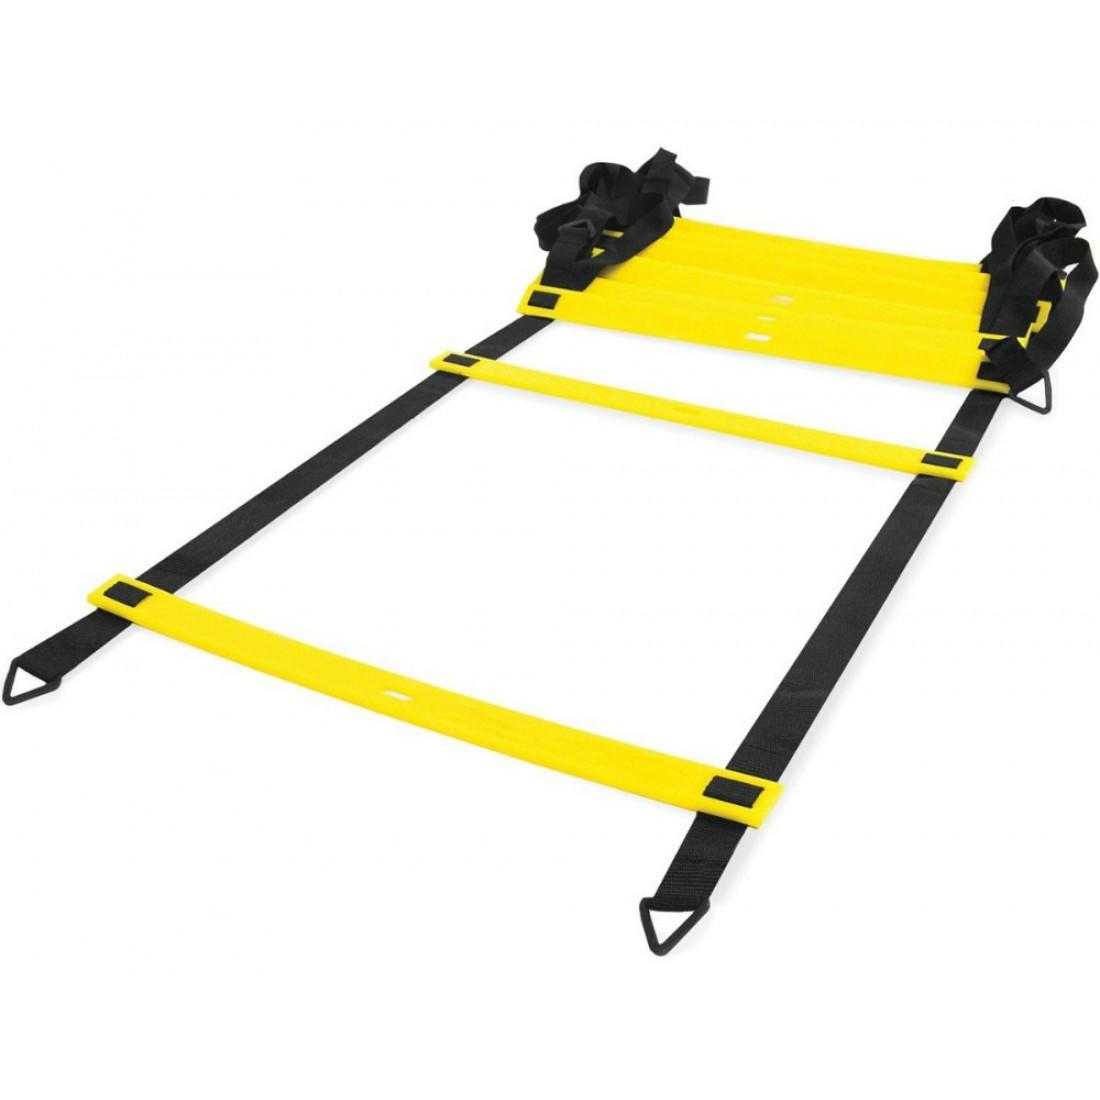 Координационная лесенка LiveUp Agility Ladder (8 m) black/yellow